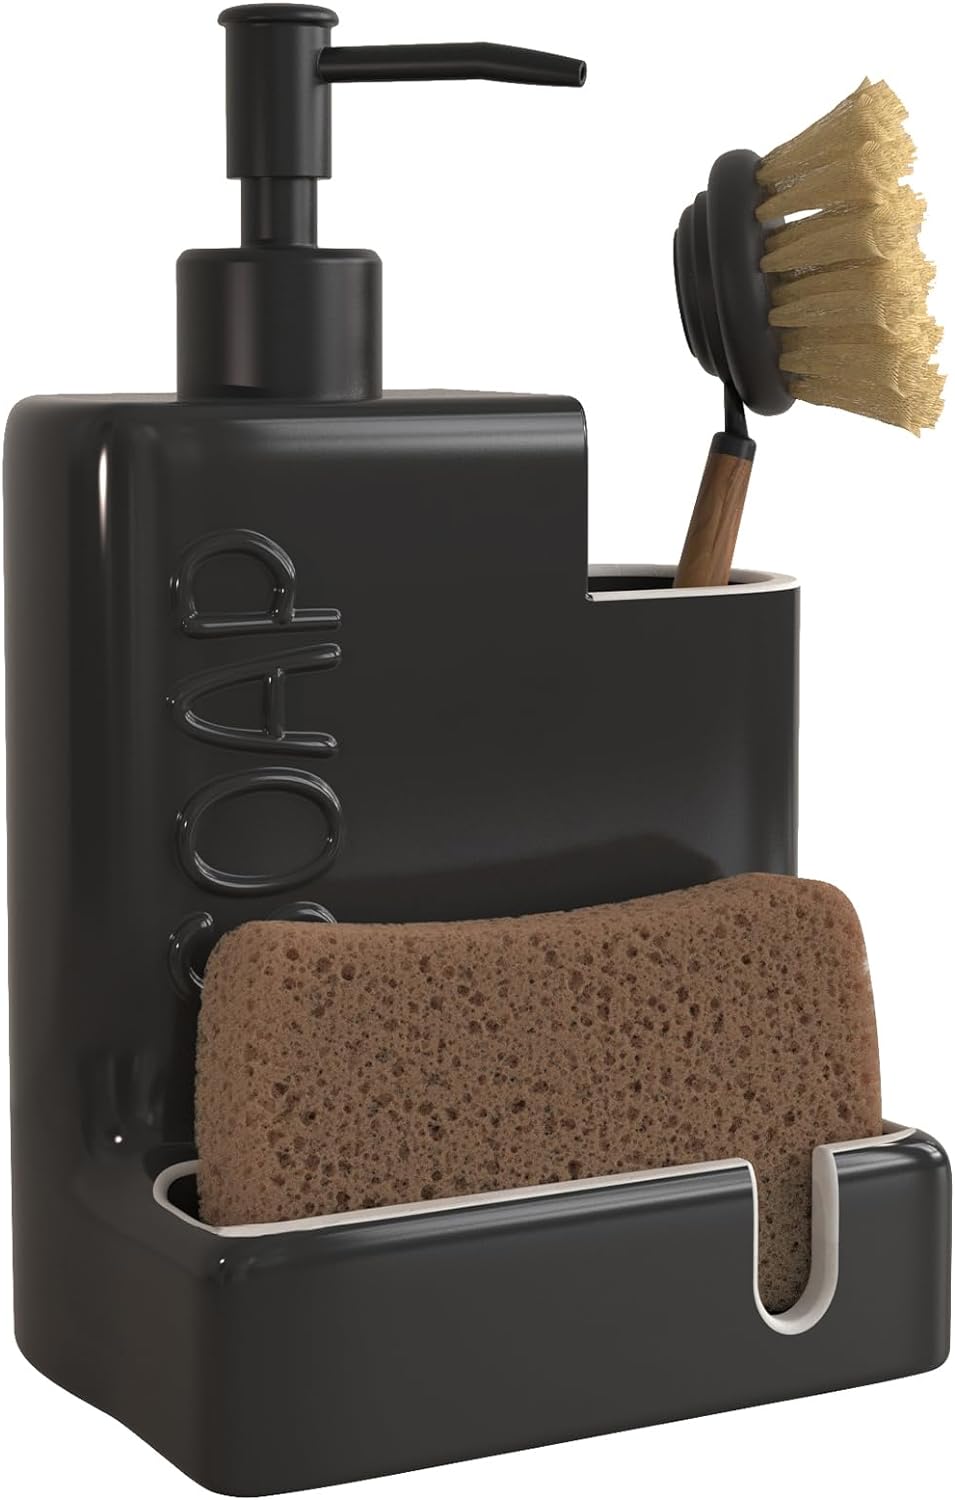 Karisky Soap Dispenser with Sponge Holder and Brush Holder, Ceramic Dish Soap Dispenser Pump, 3 in 1 Liquid Hand Soap Organizer with Funnel for Kitchen Sink Countertop, Matte Black